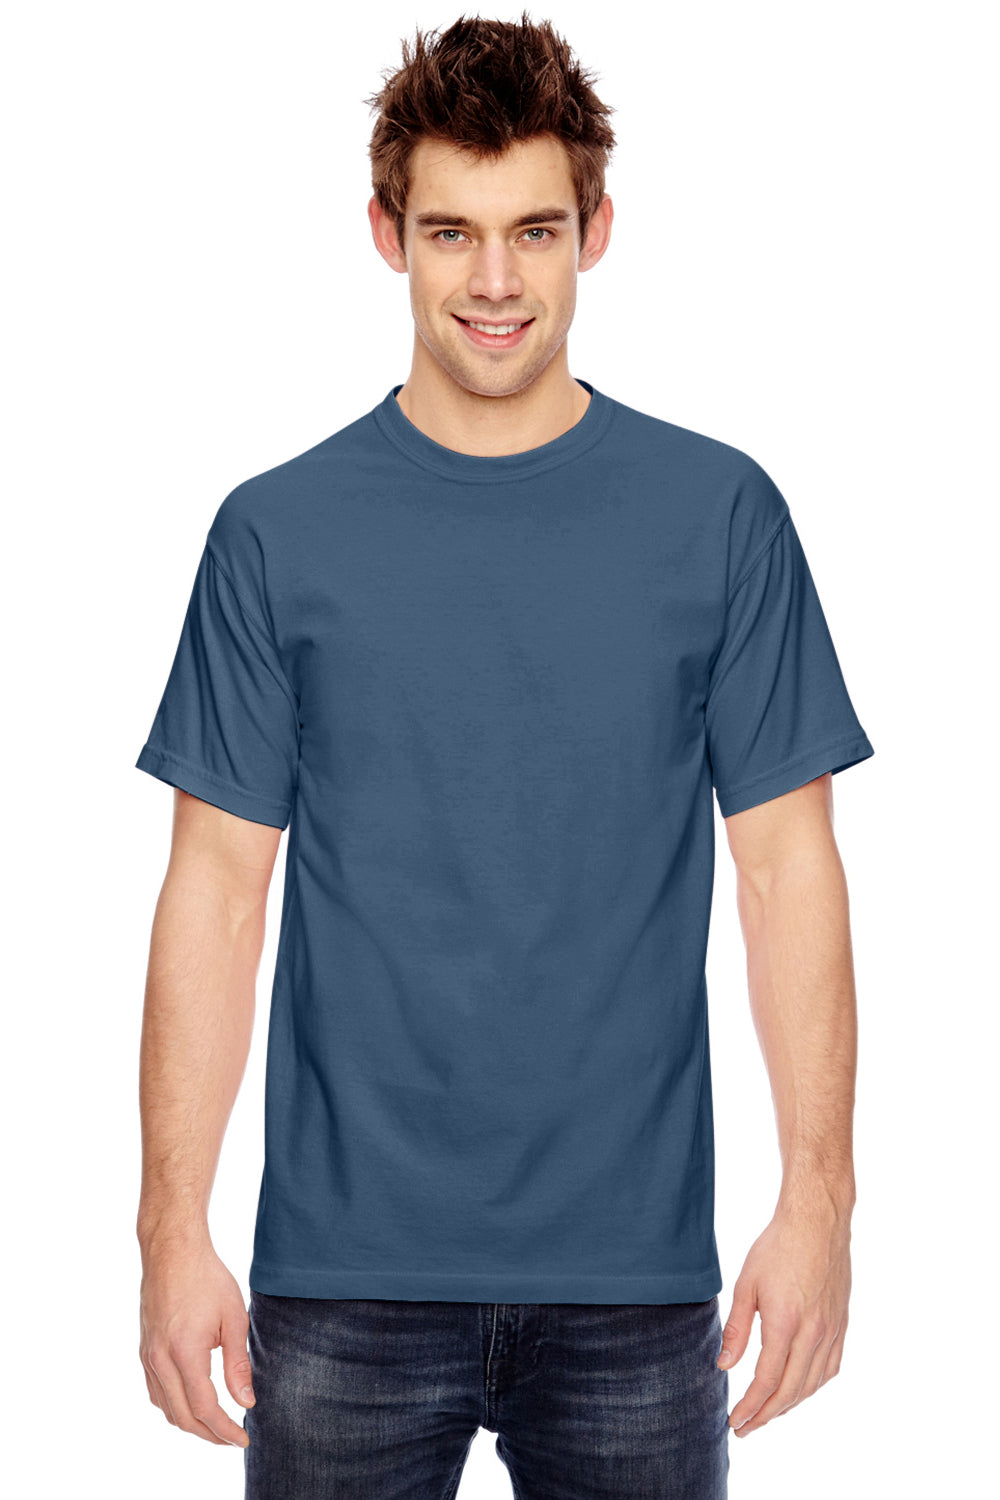 Comfort Colors C1717 Mens Short Sleeve Crewneck T-Shirt Navy Blue Front